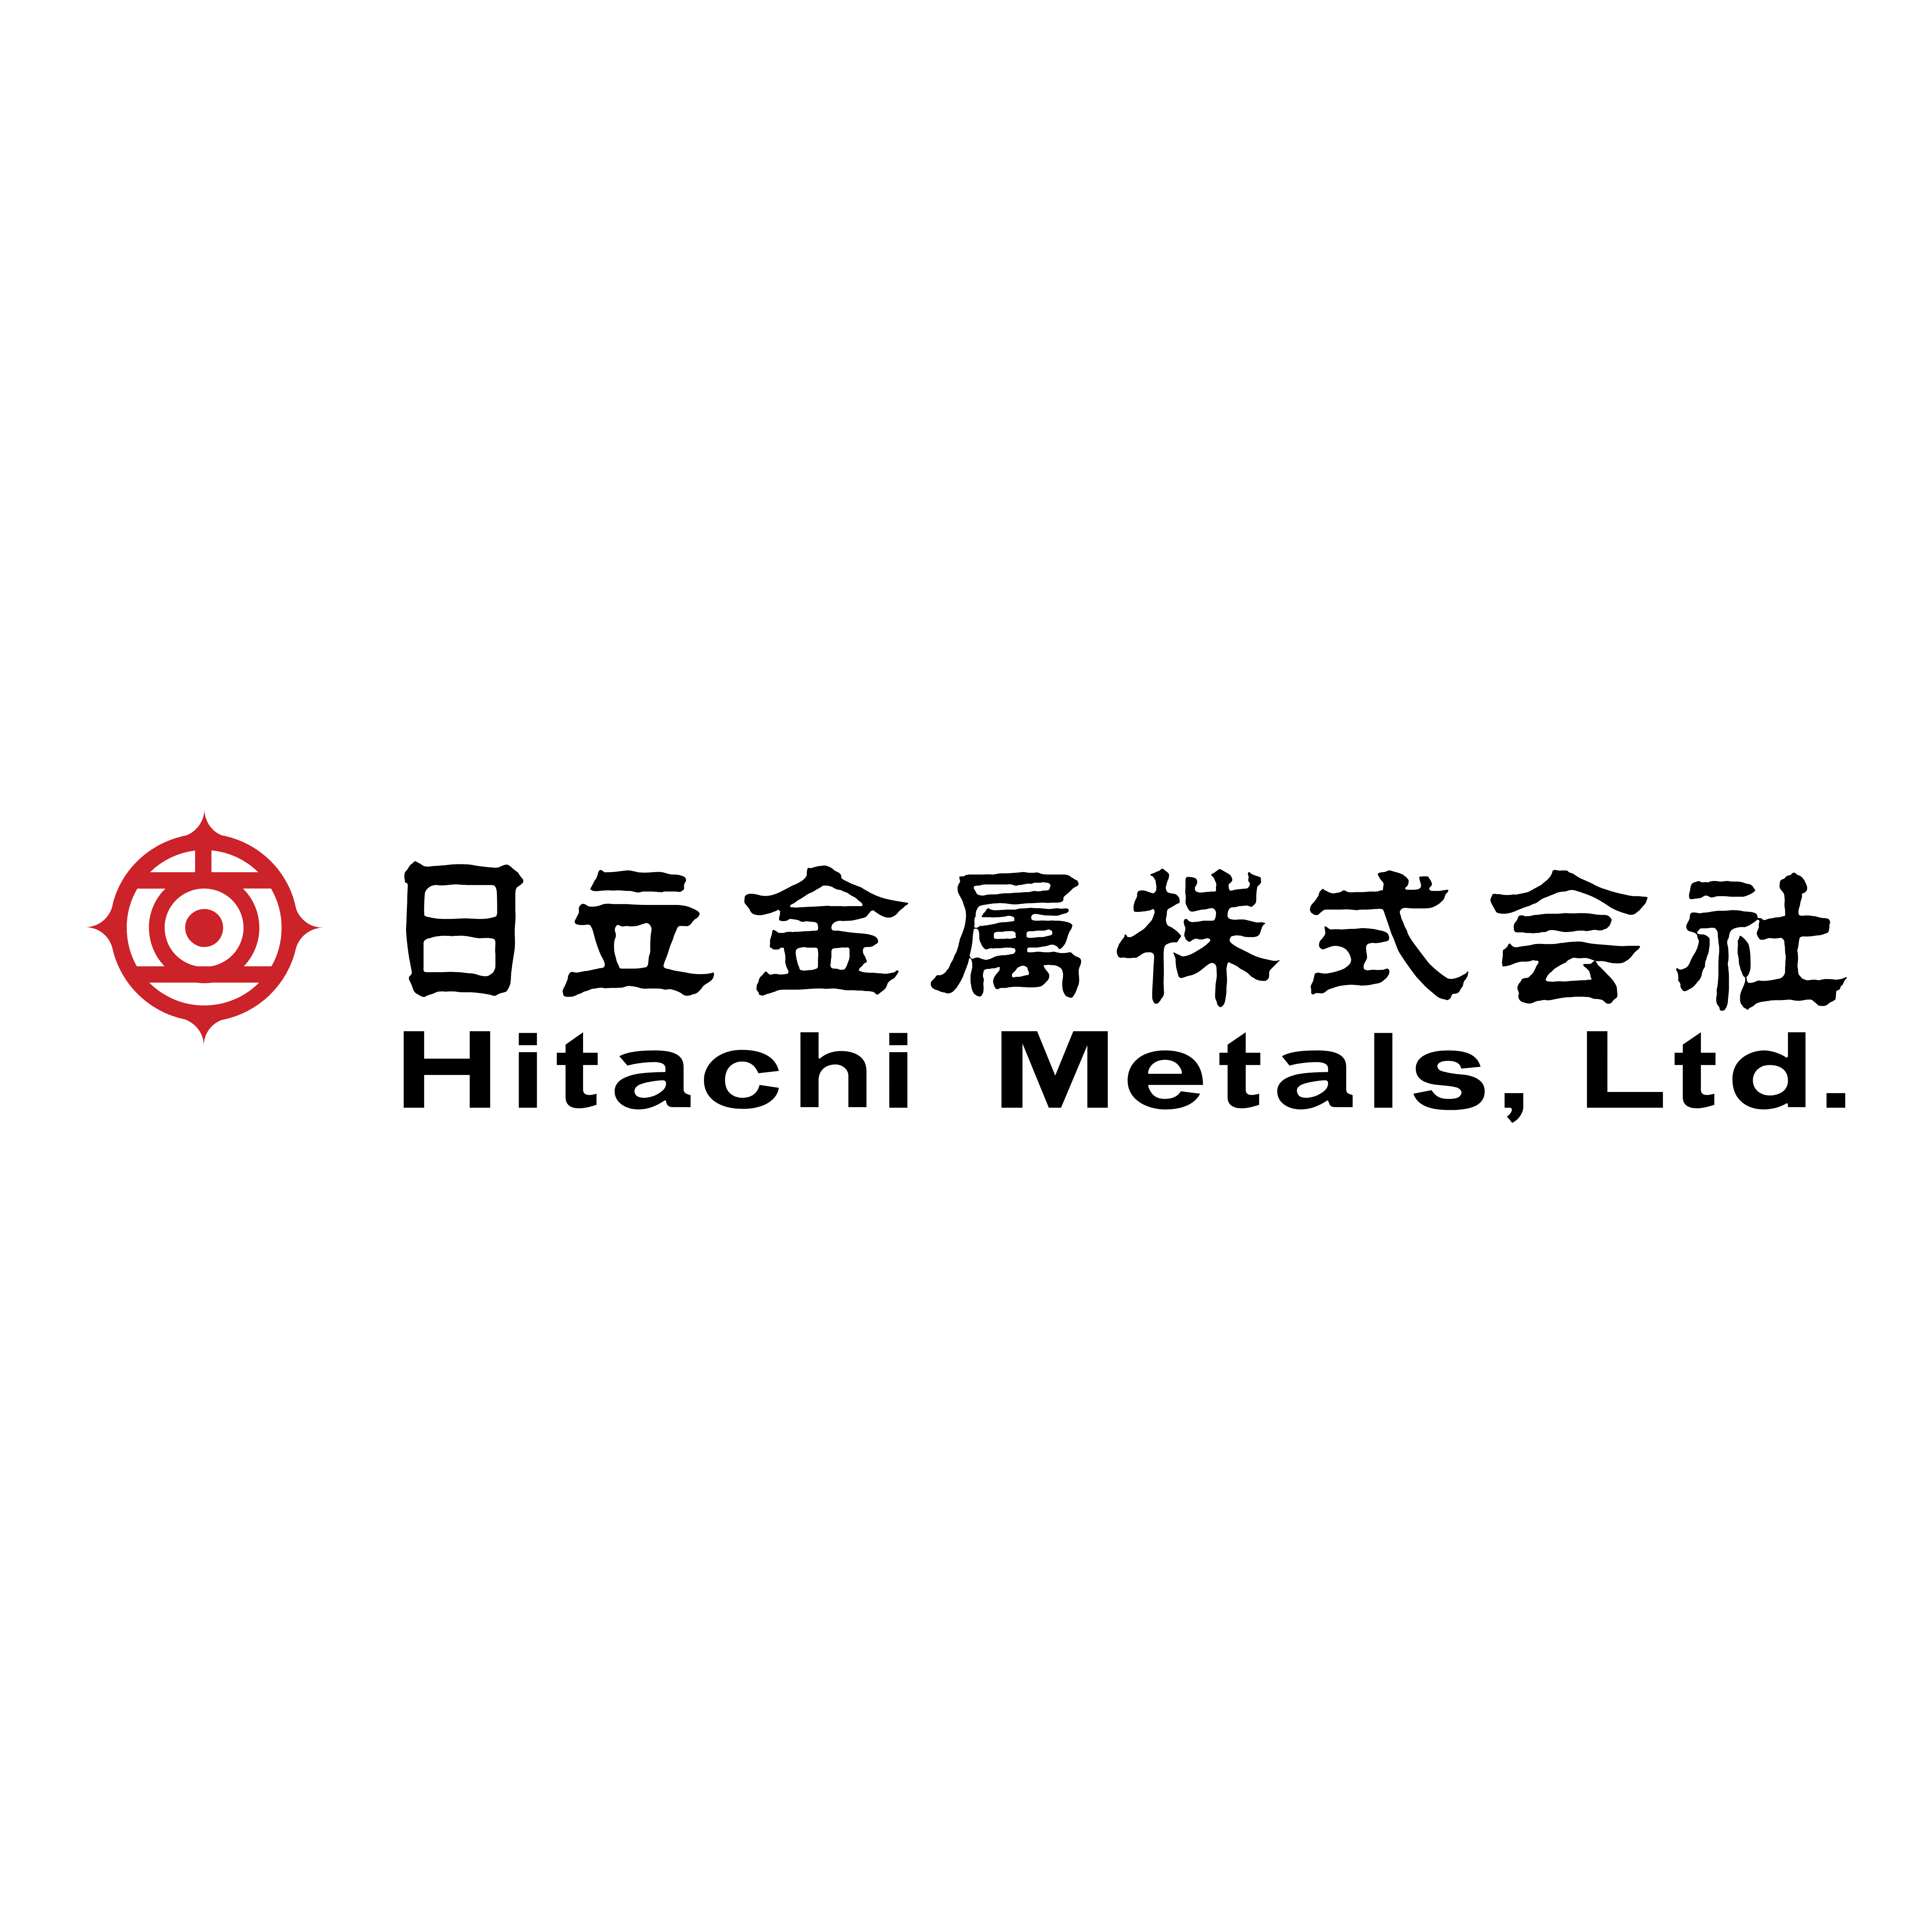 Hitachi White Logo - Pluspng